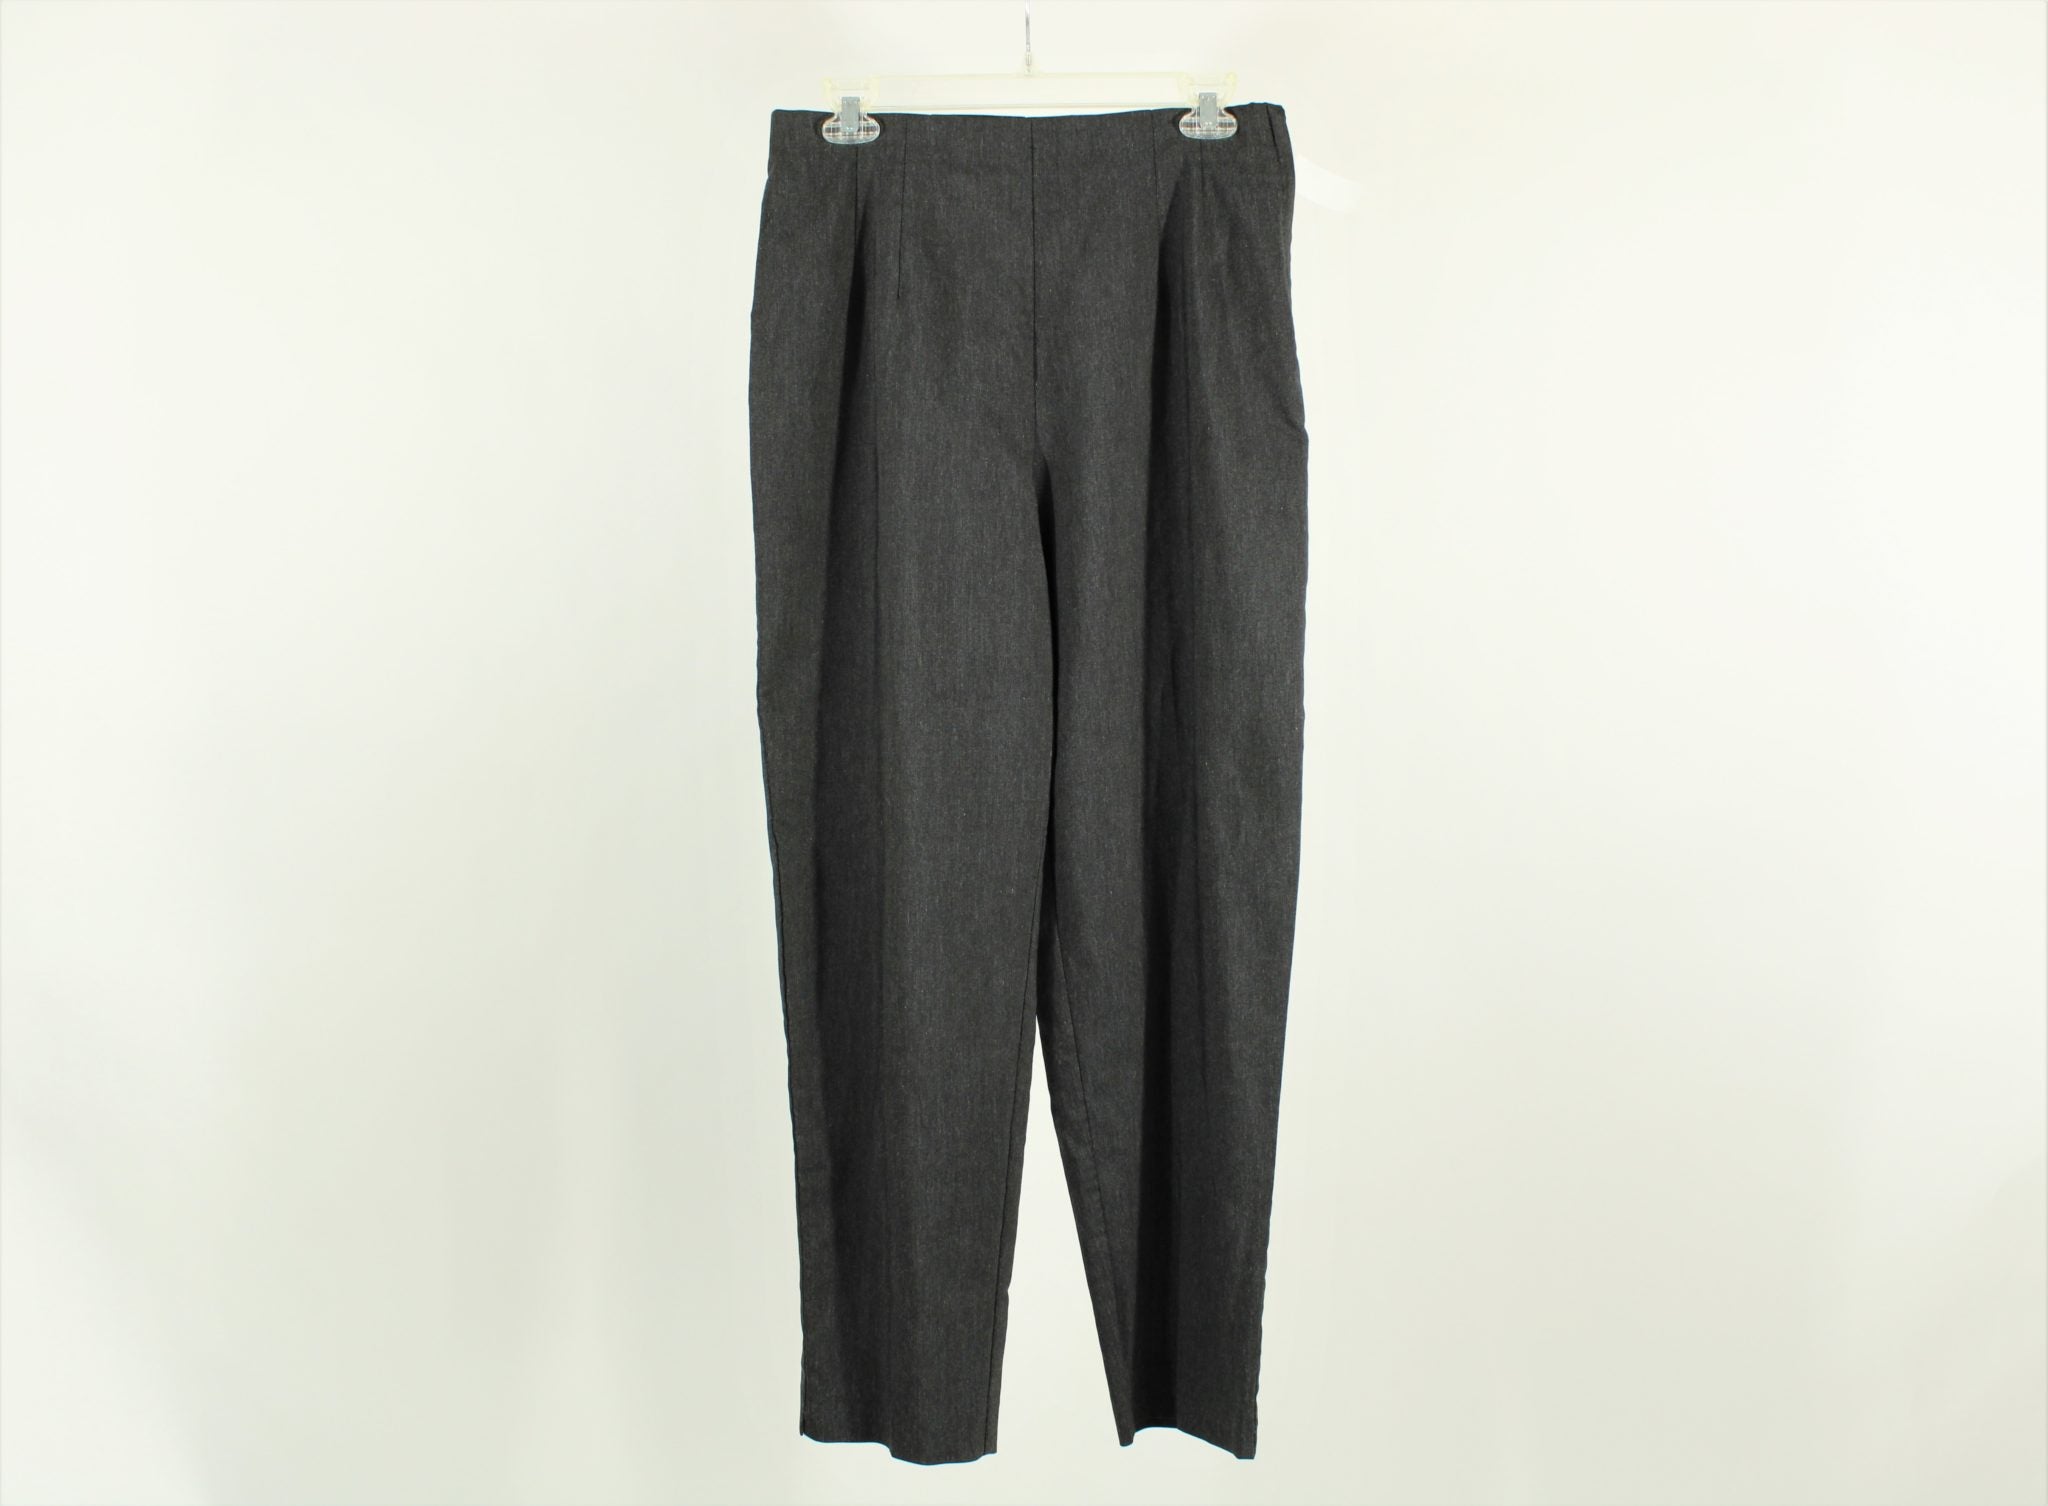 Fashion Bug Charcoal Gray Slacks | Size 10 Petite